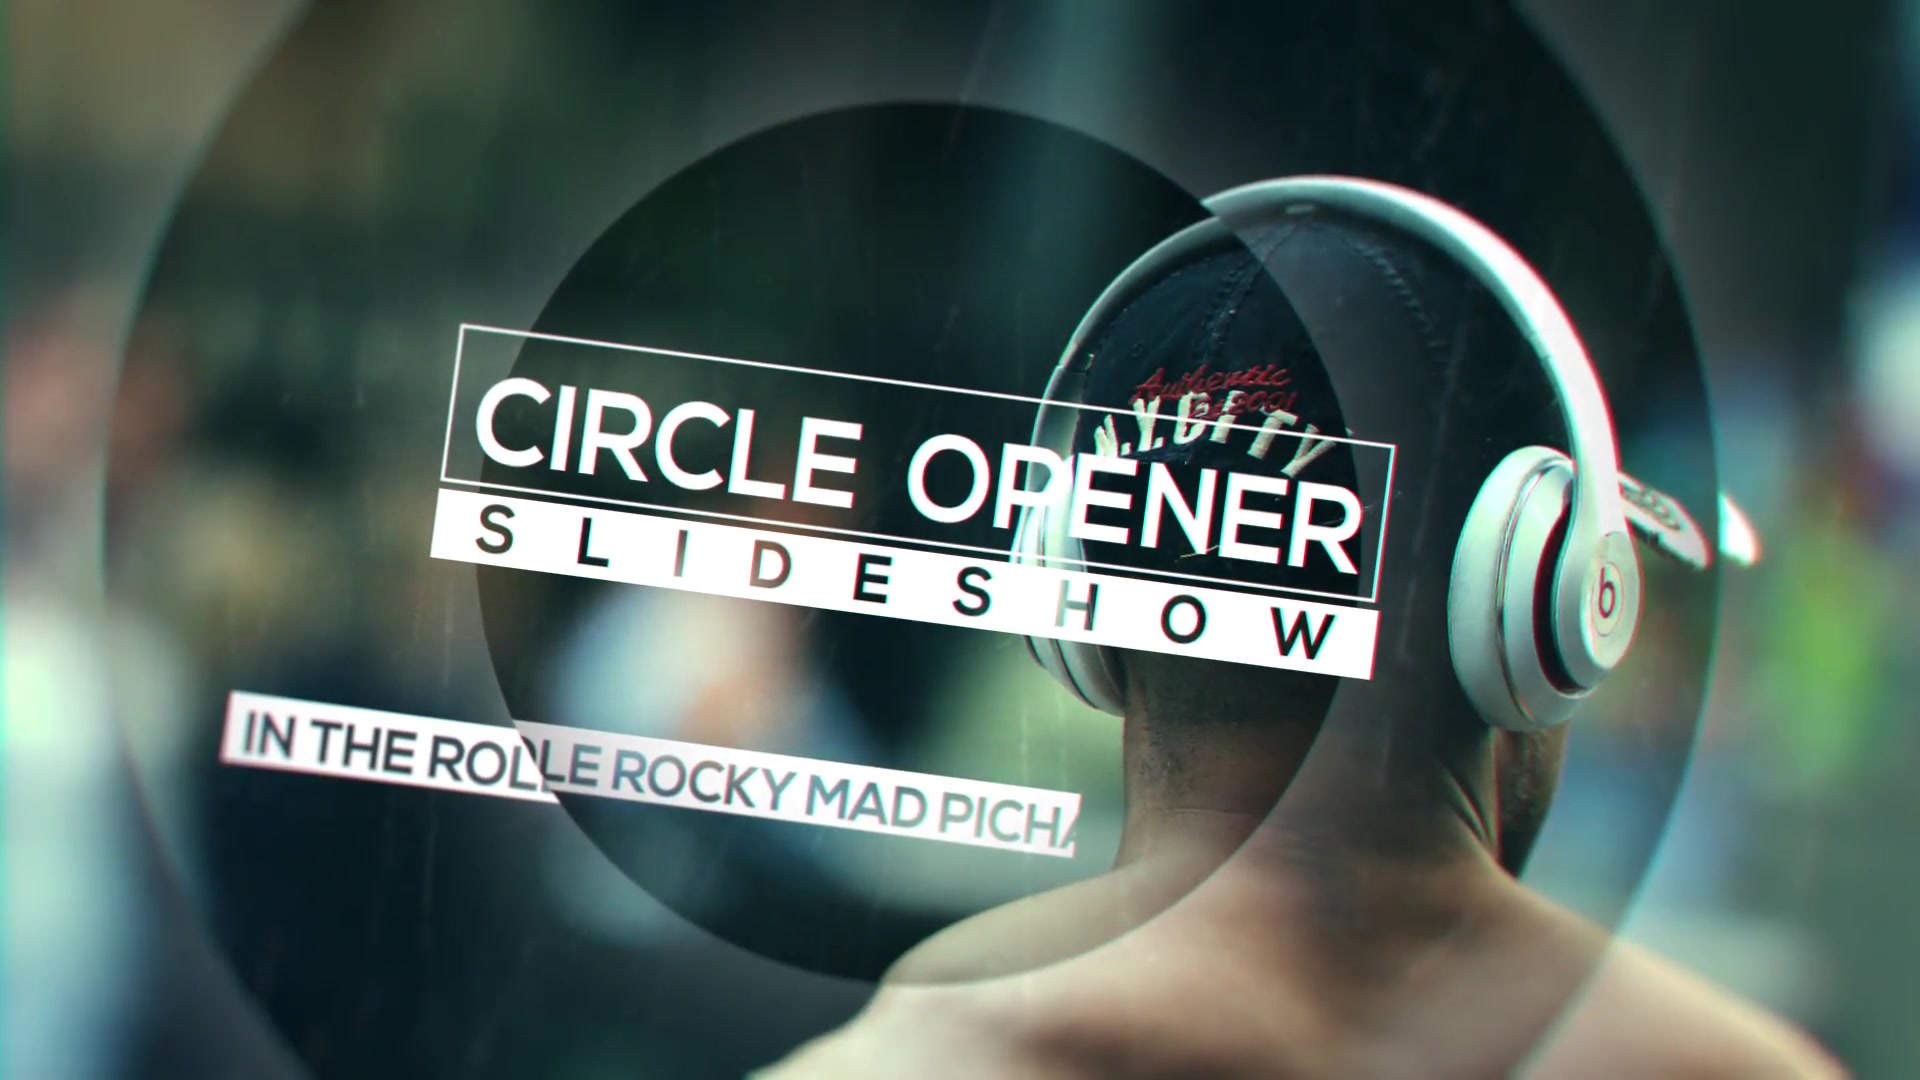 Circle Opener - Download Videohive 15186453